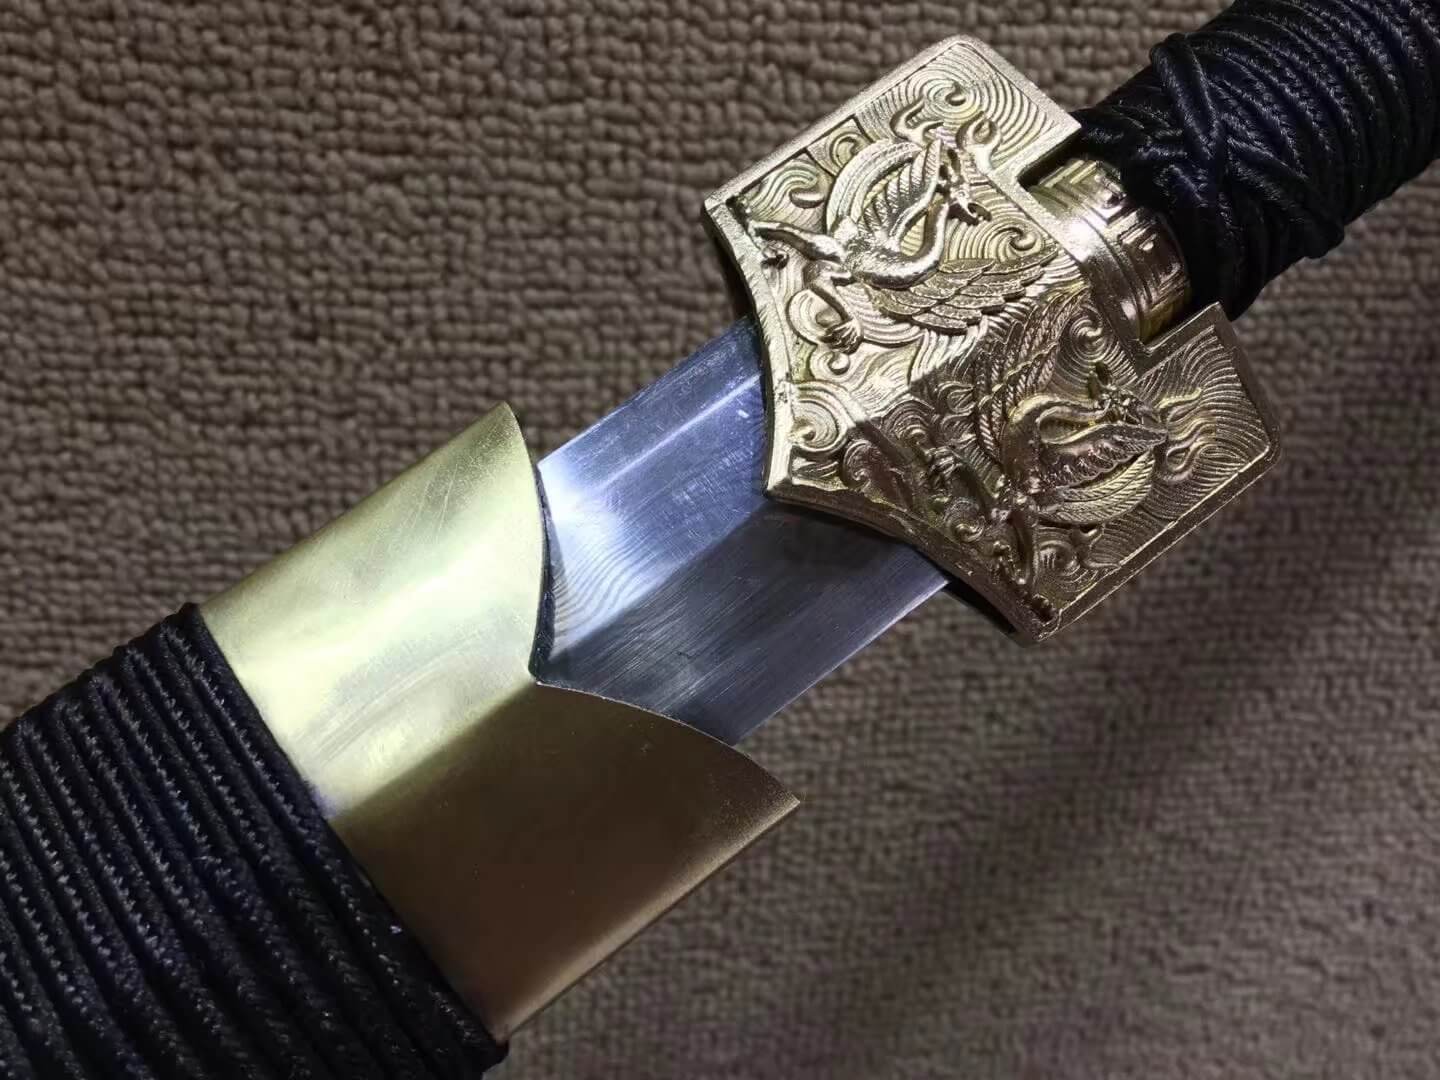 Han sword(Damascus steel bade,Black scabbard,Brass fittings)Length 41" - Chinese sword shop